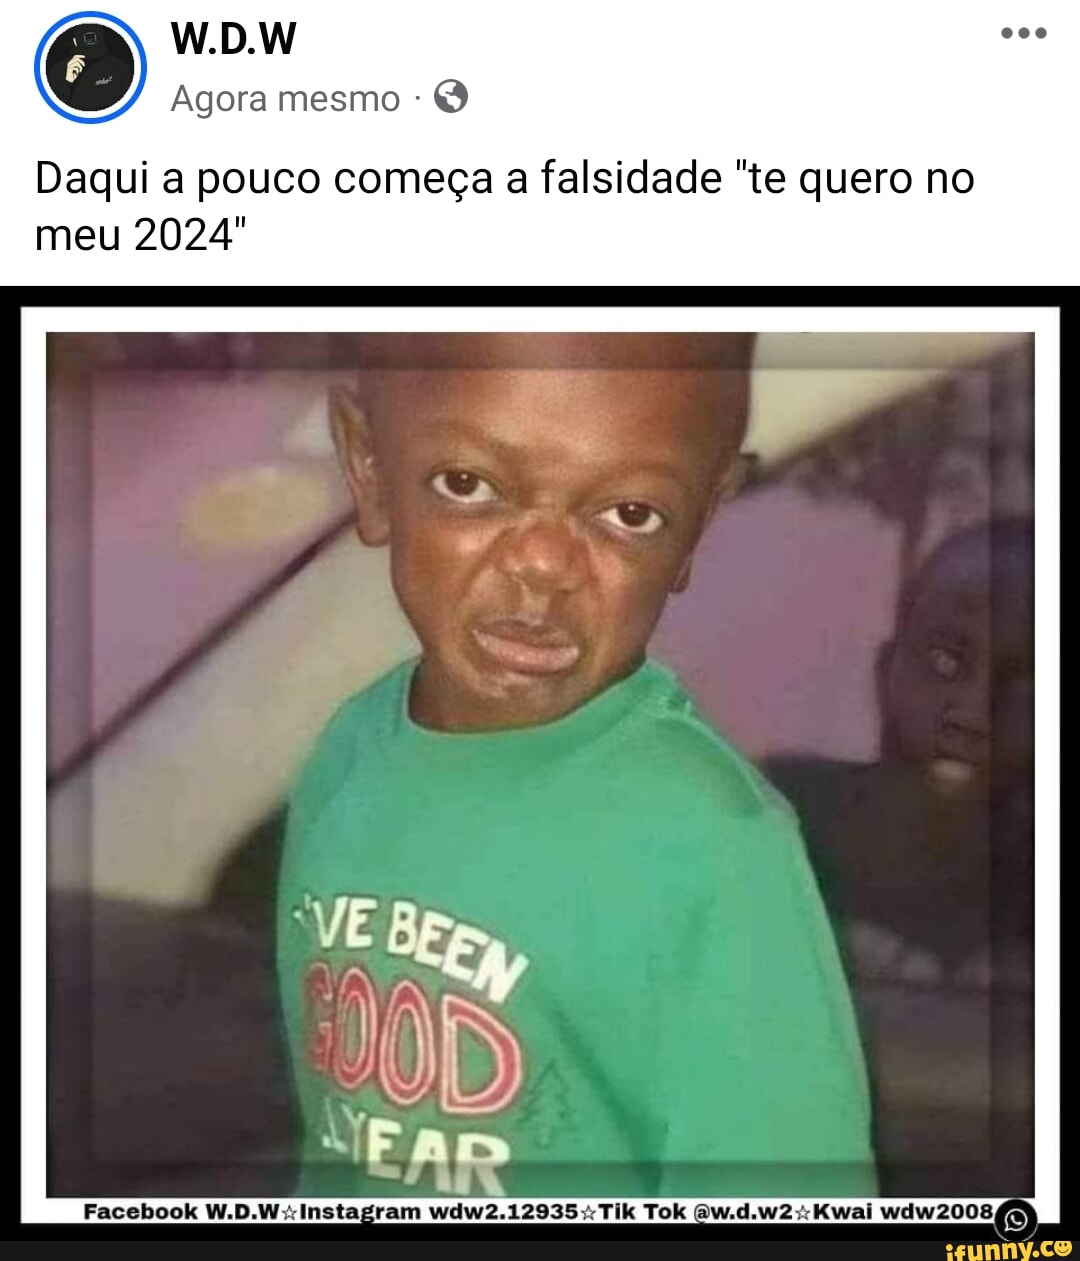 Fofinhos memes. Best Collection of funny Fofinhos pictures on iFunny Brazil